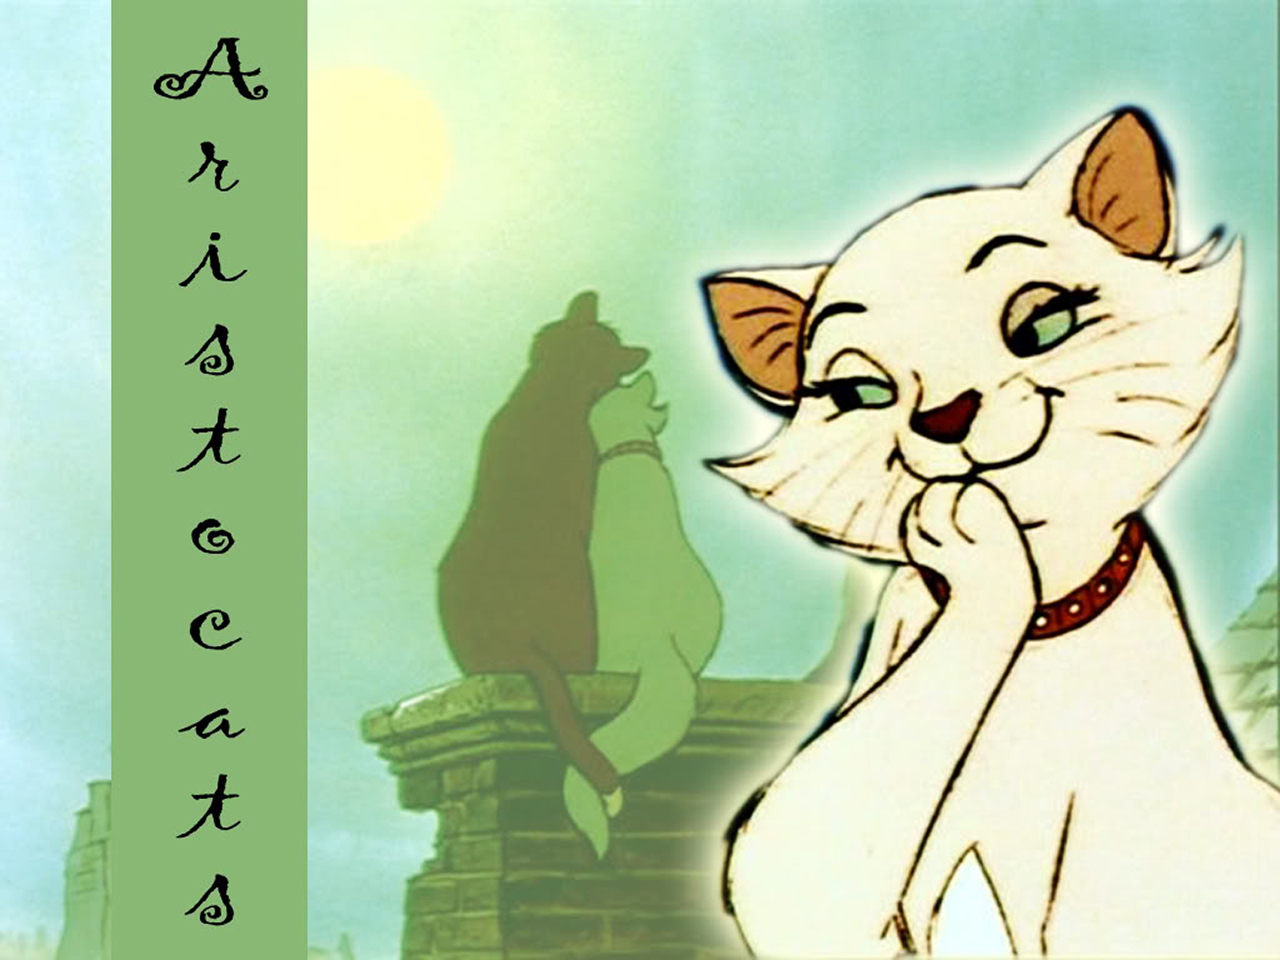 Wallpaper  1920x1200 px animation Aristocats cartoon cat cats  Disney family the 1920x1200  4kWallpaper  1908991  HD Wallpapers   WallHere